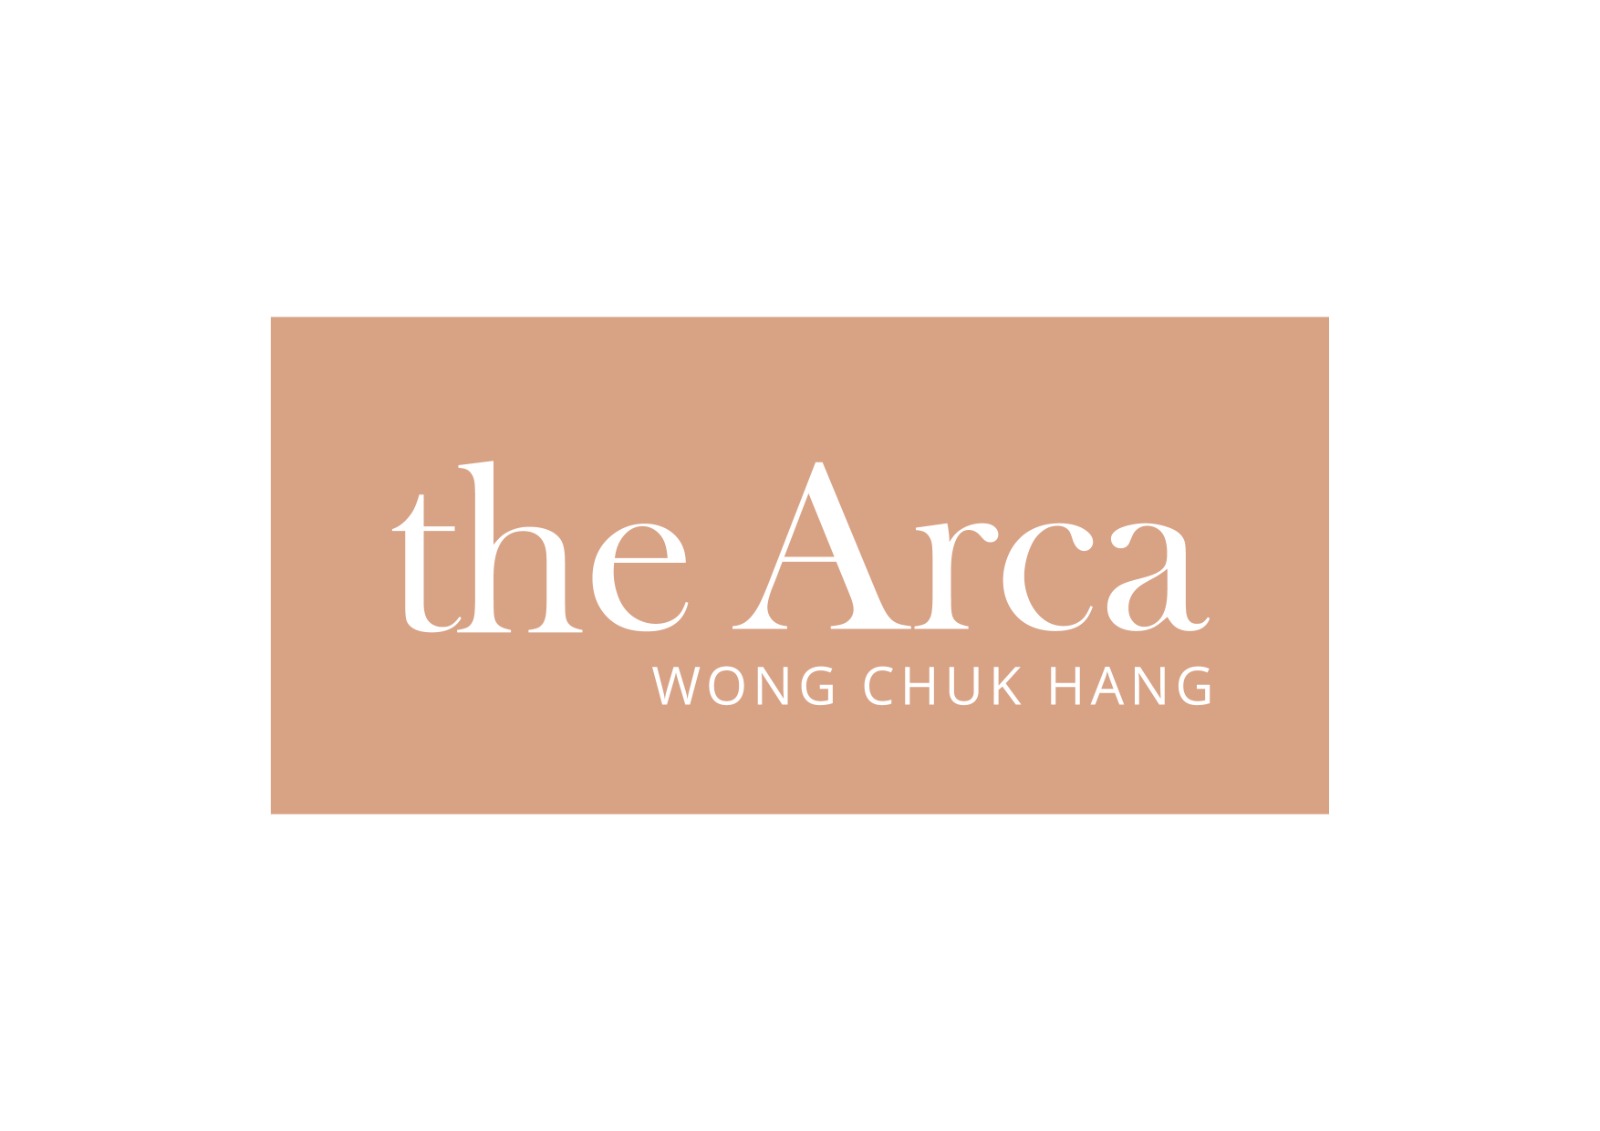 The Arca Hotel, HK